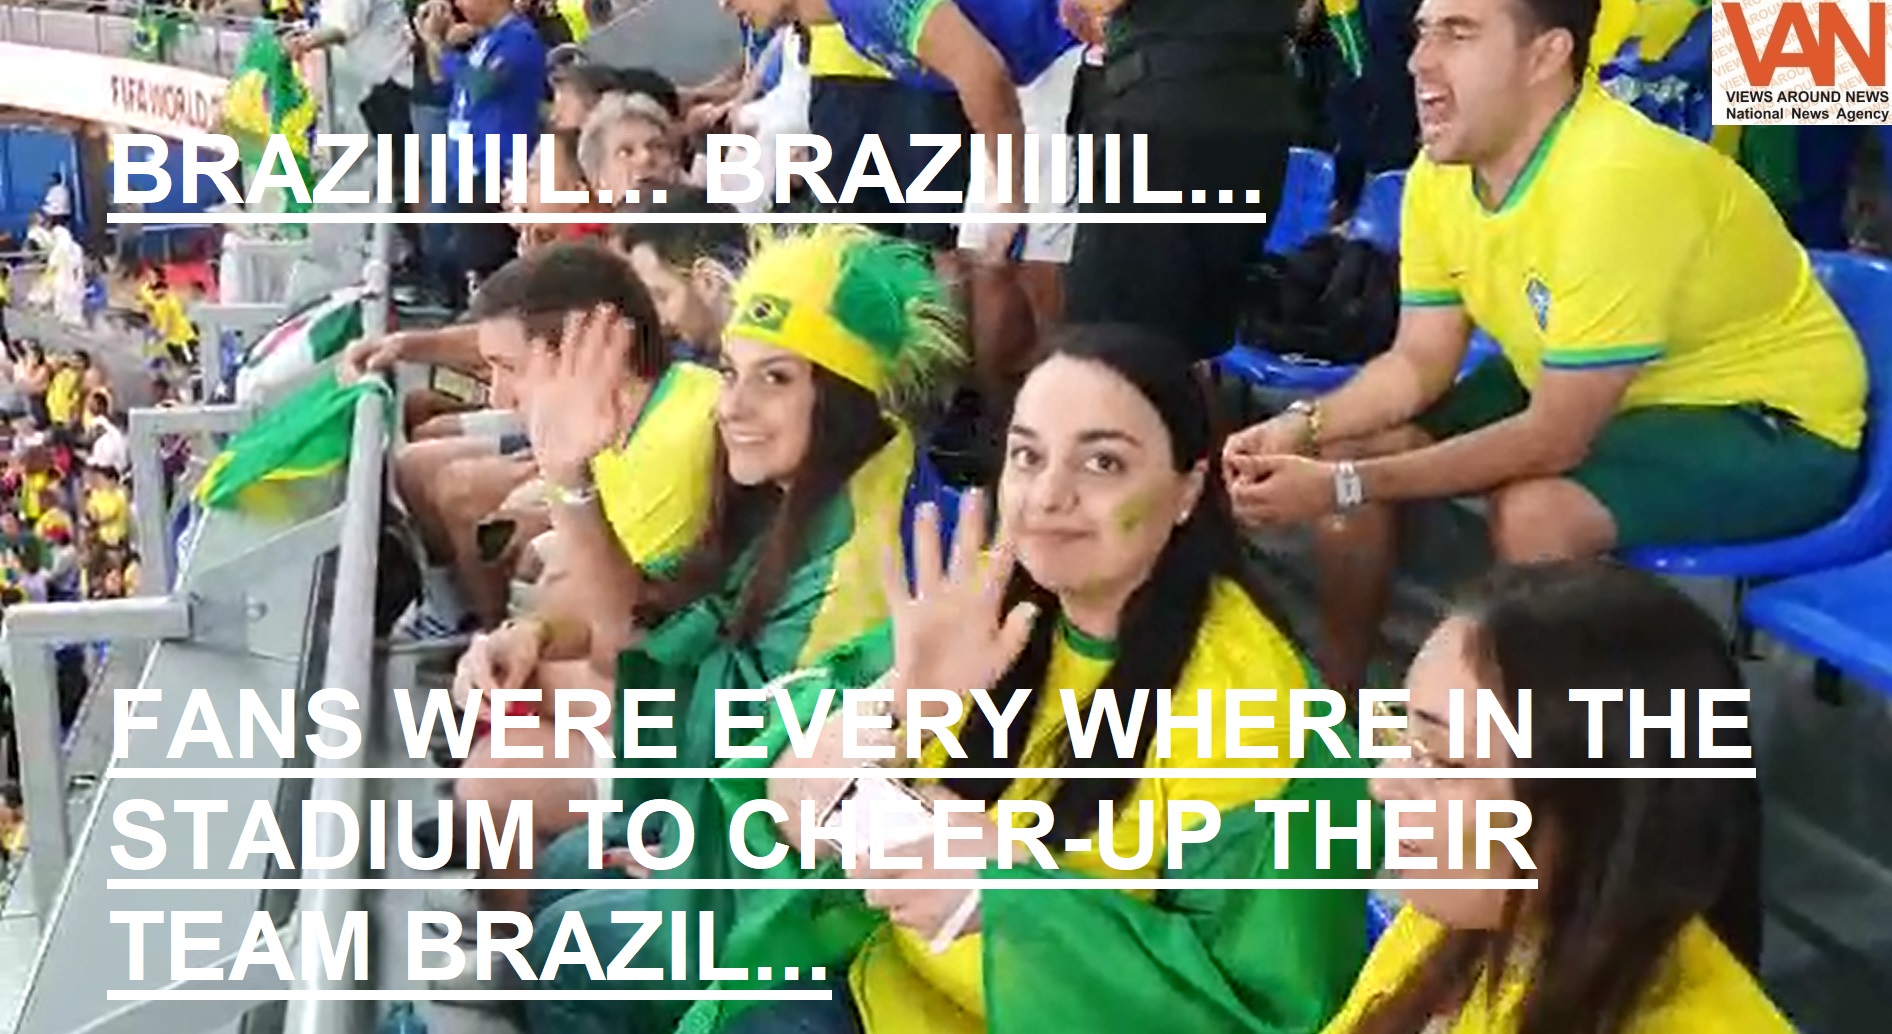 Brazilian fans were enjoying every where in the st